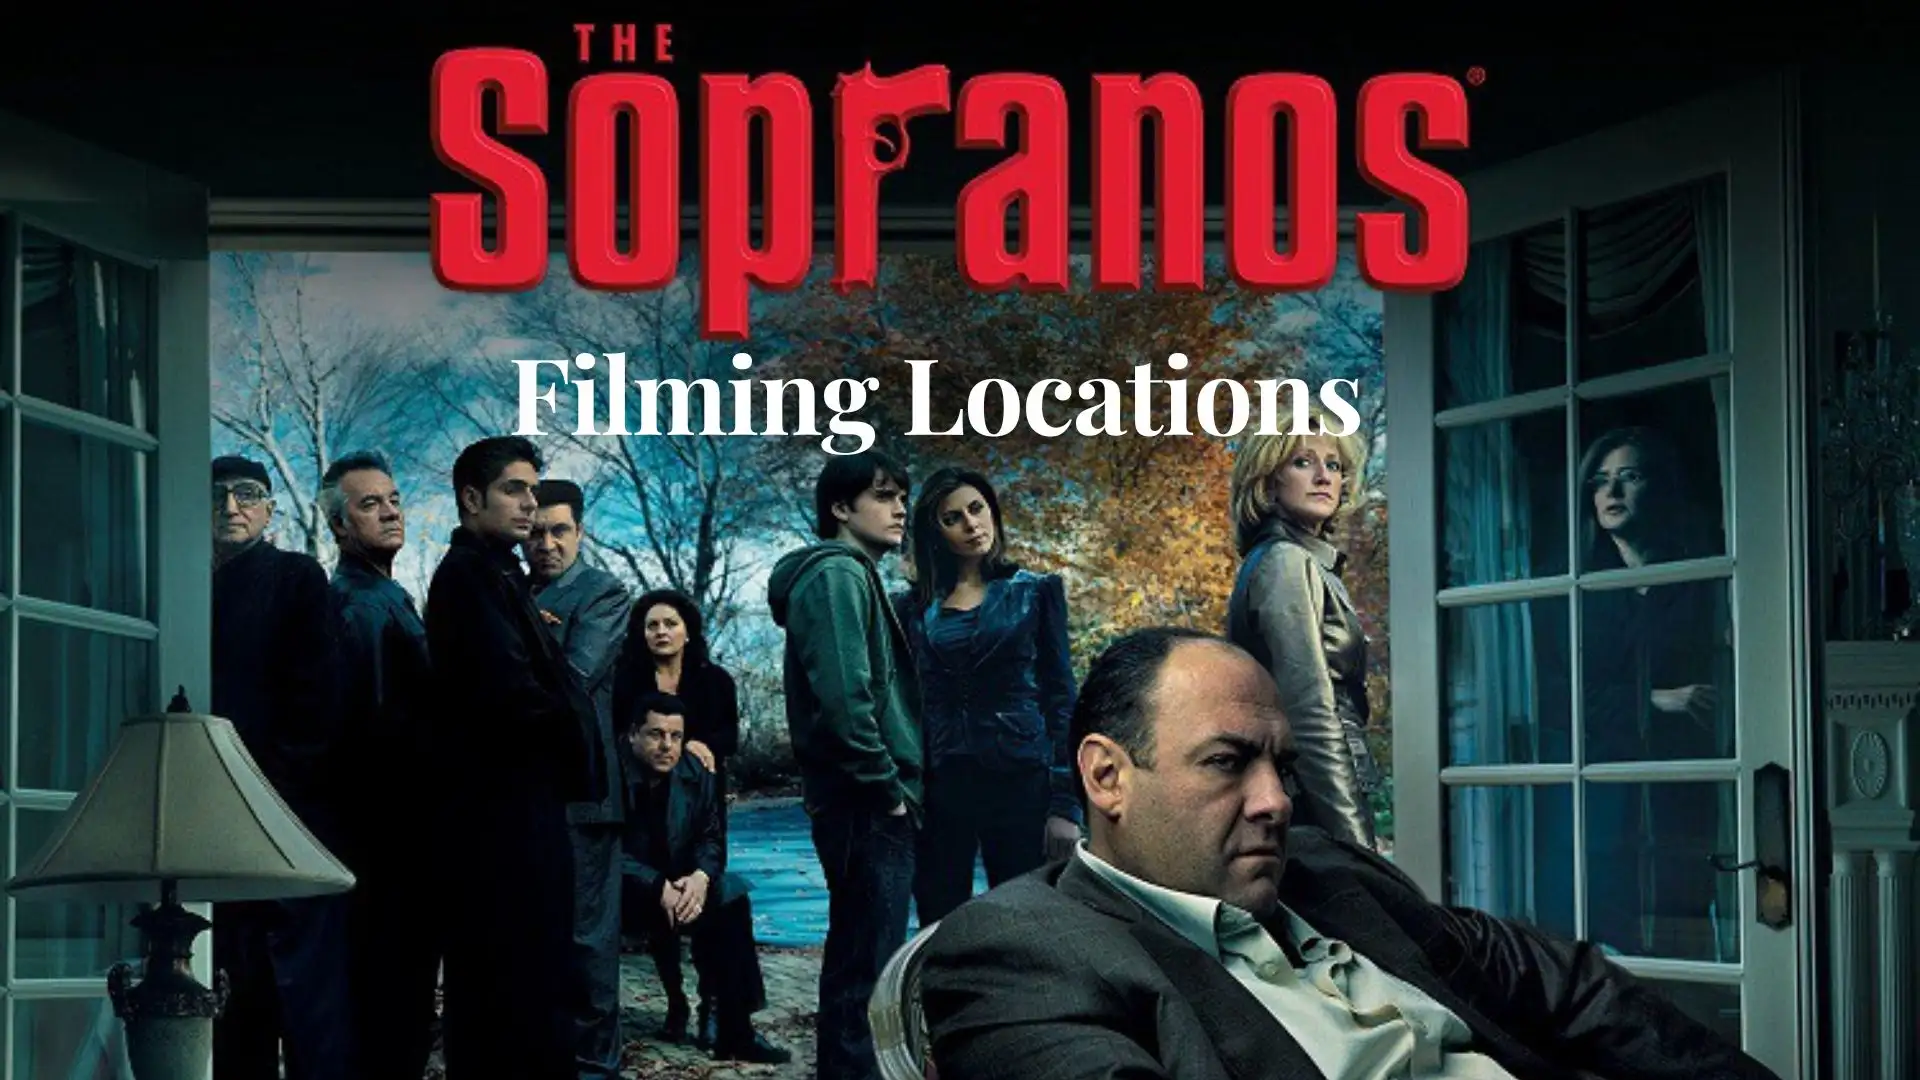 The Sopranos Season 6 Filming Locations